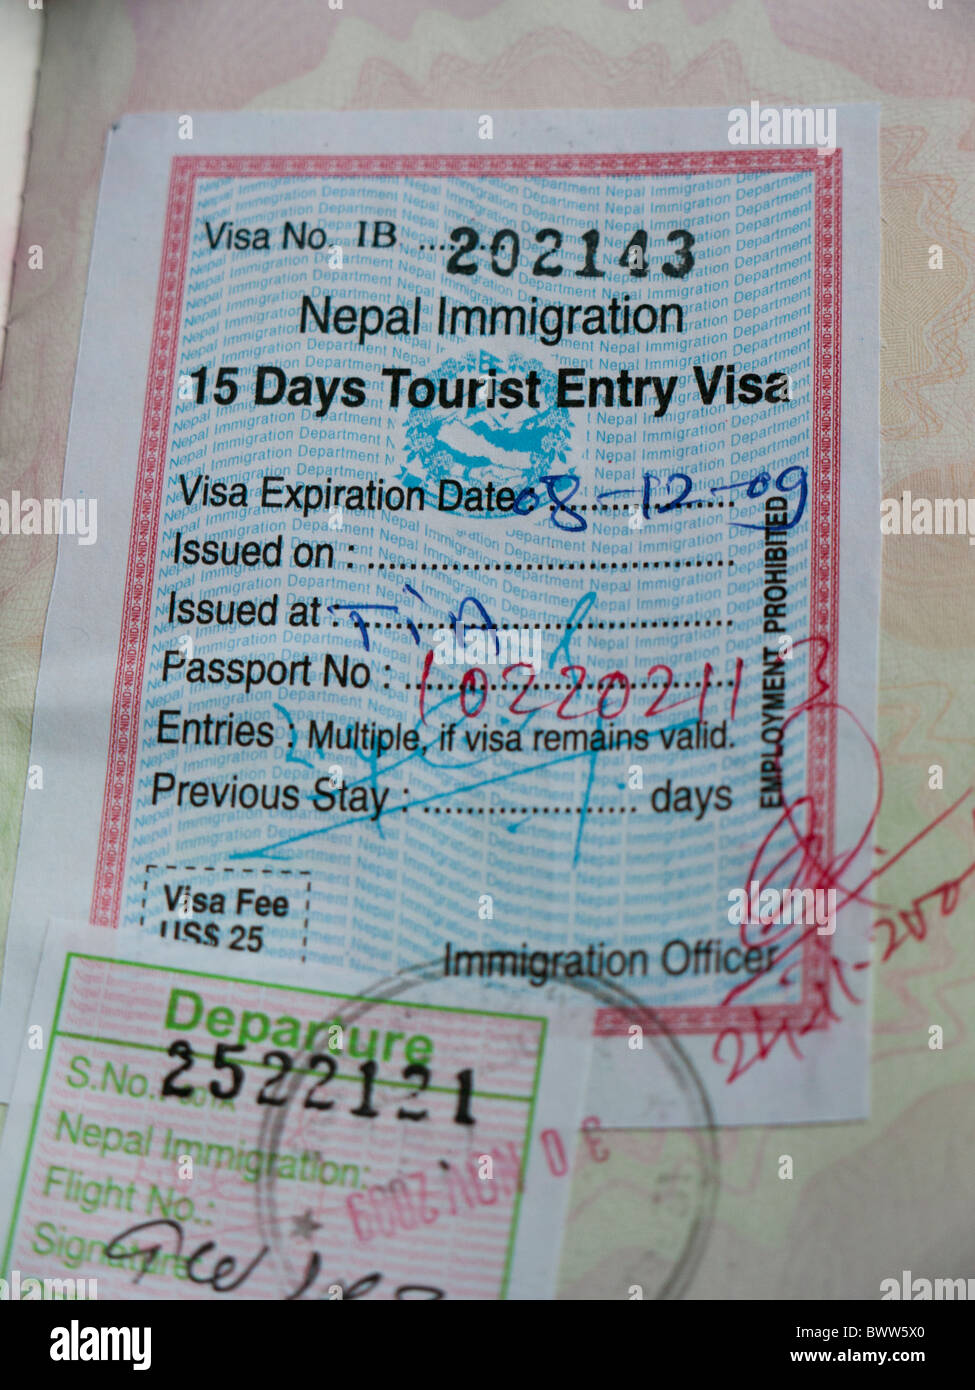 Nepal Immigration tourist visa in a passport Stock Photo - Alamy